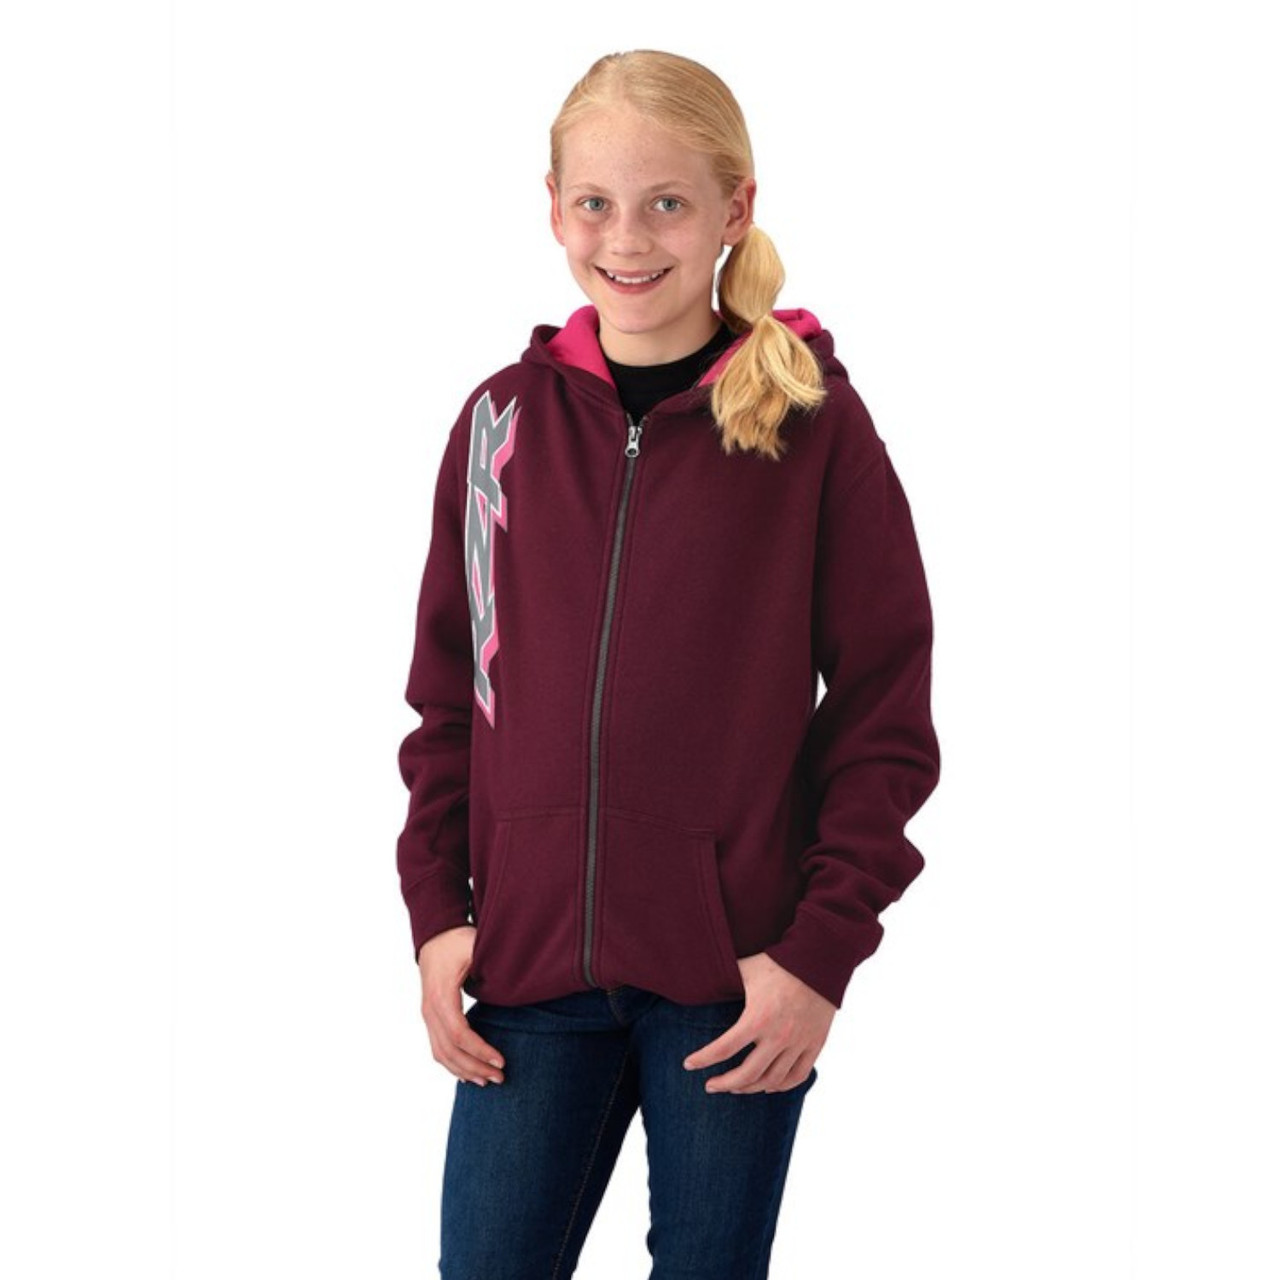 Polaris New OEM, Full-Zip Hoodie Sweatshirt, Youth Girl's Medium, 286872703